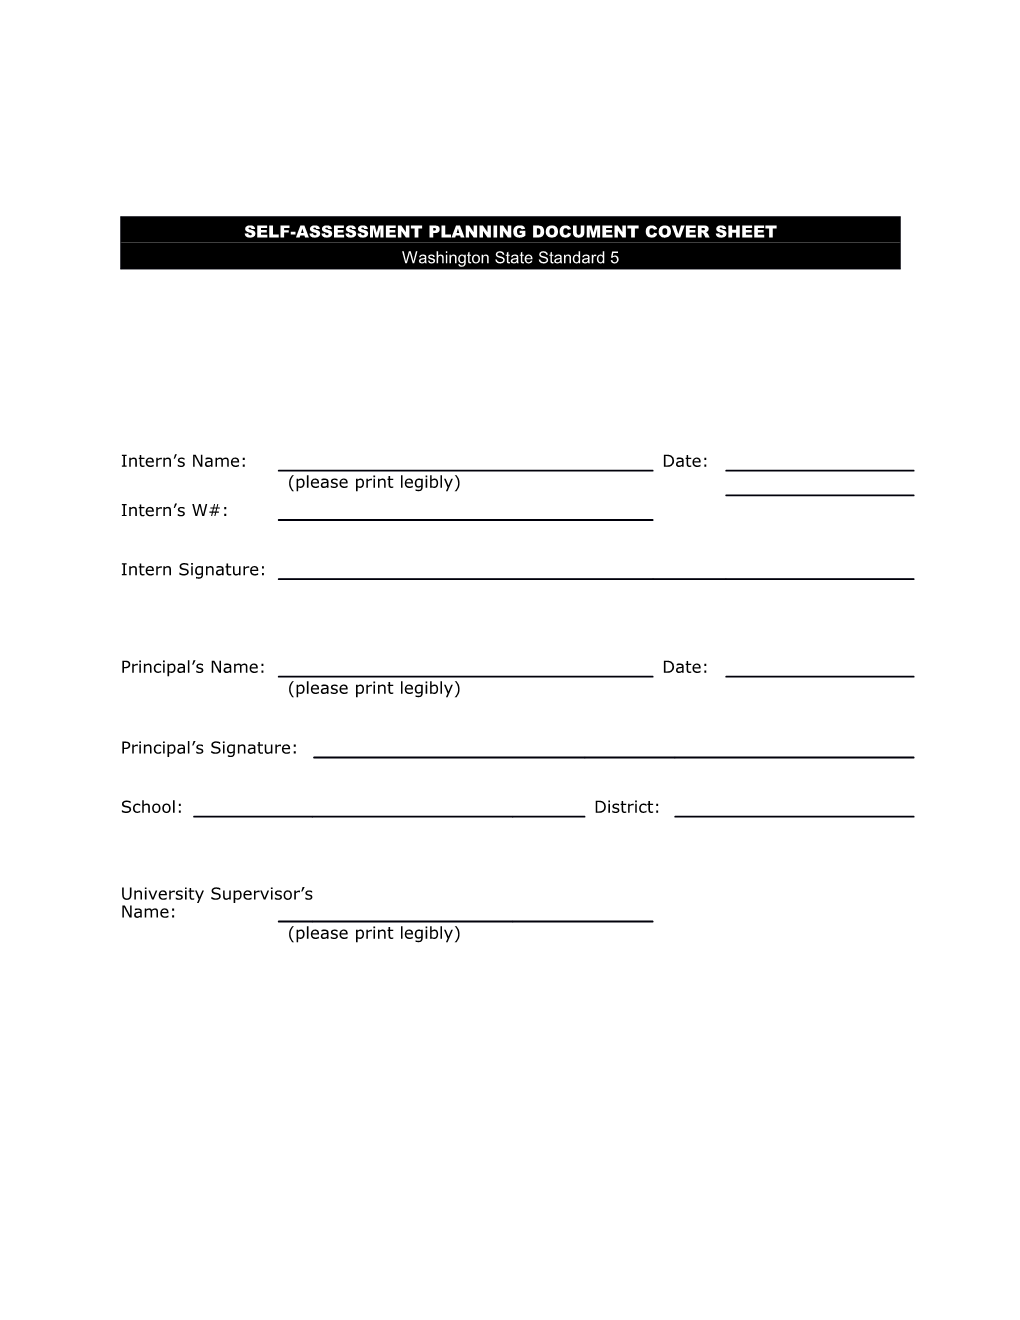 Self-Assessment Planning Document Cover Sheet